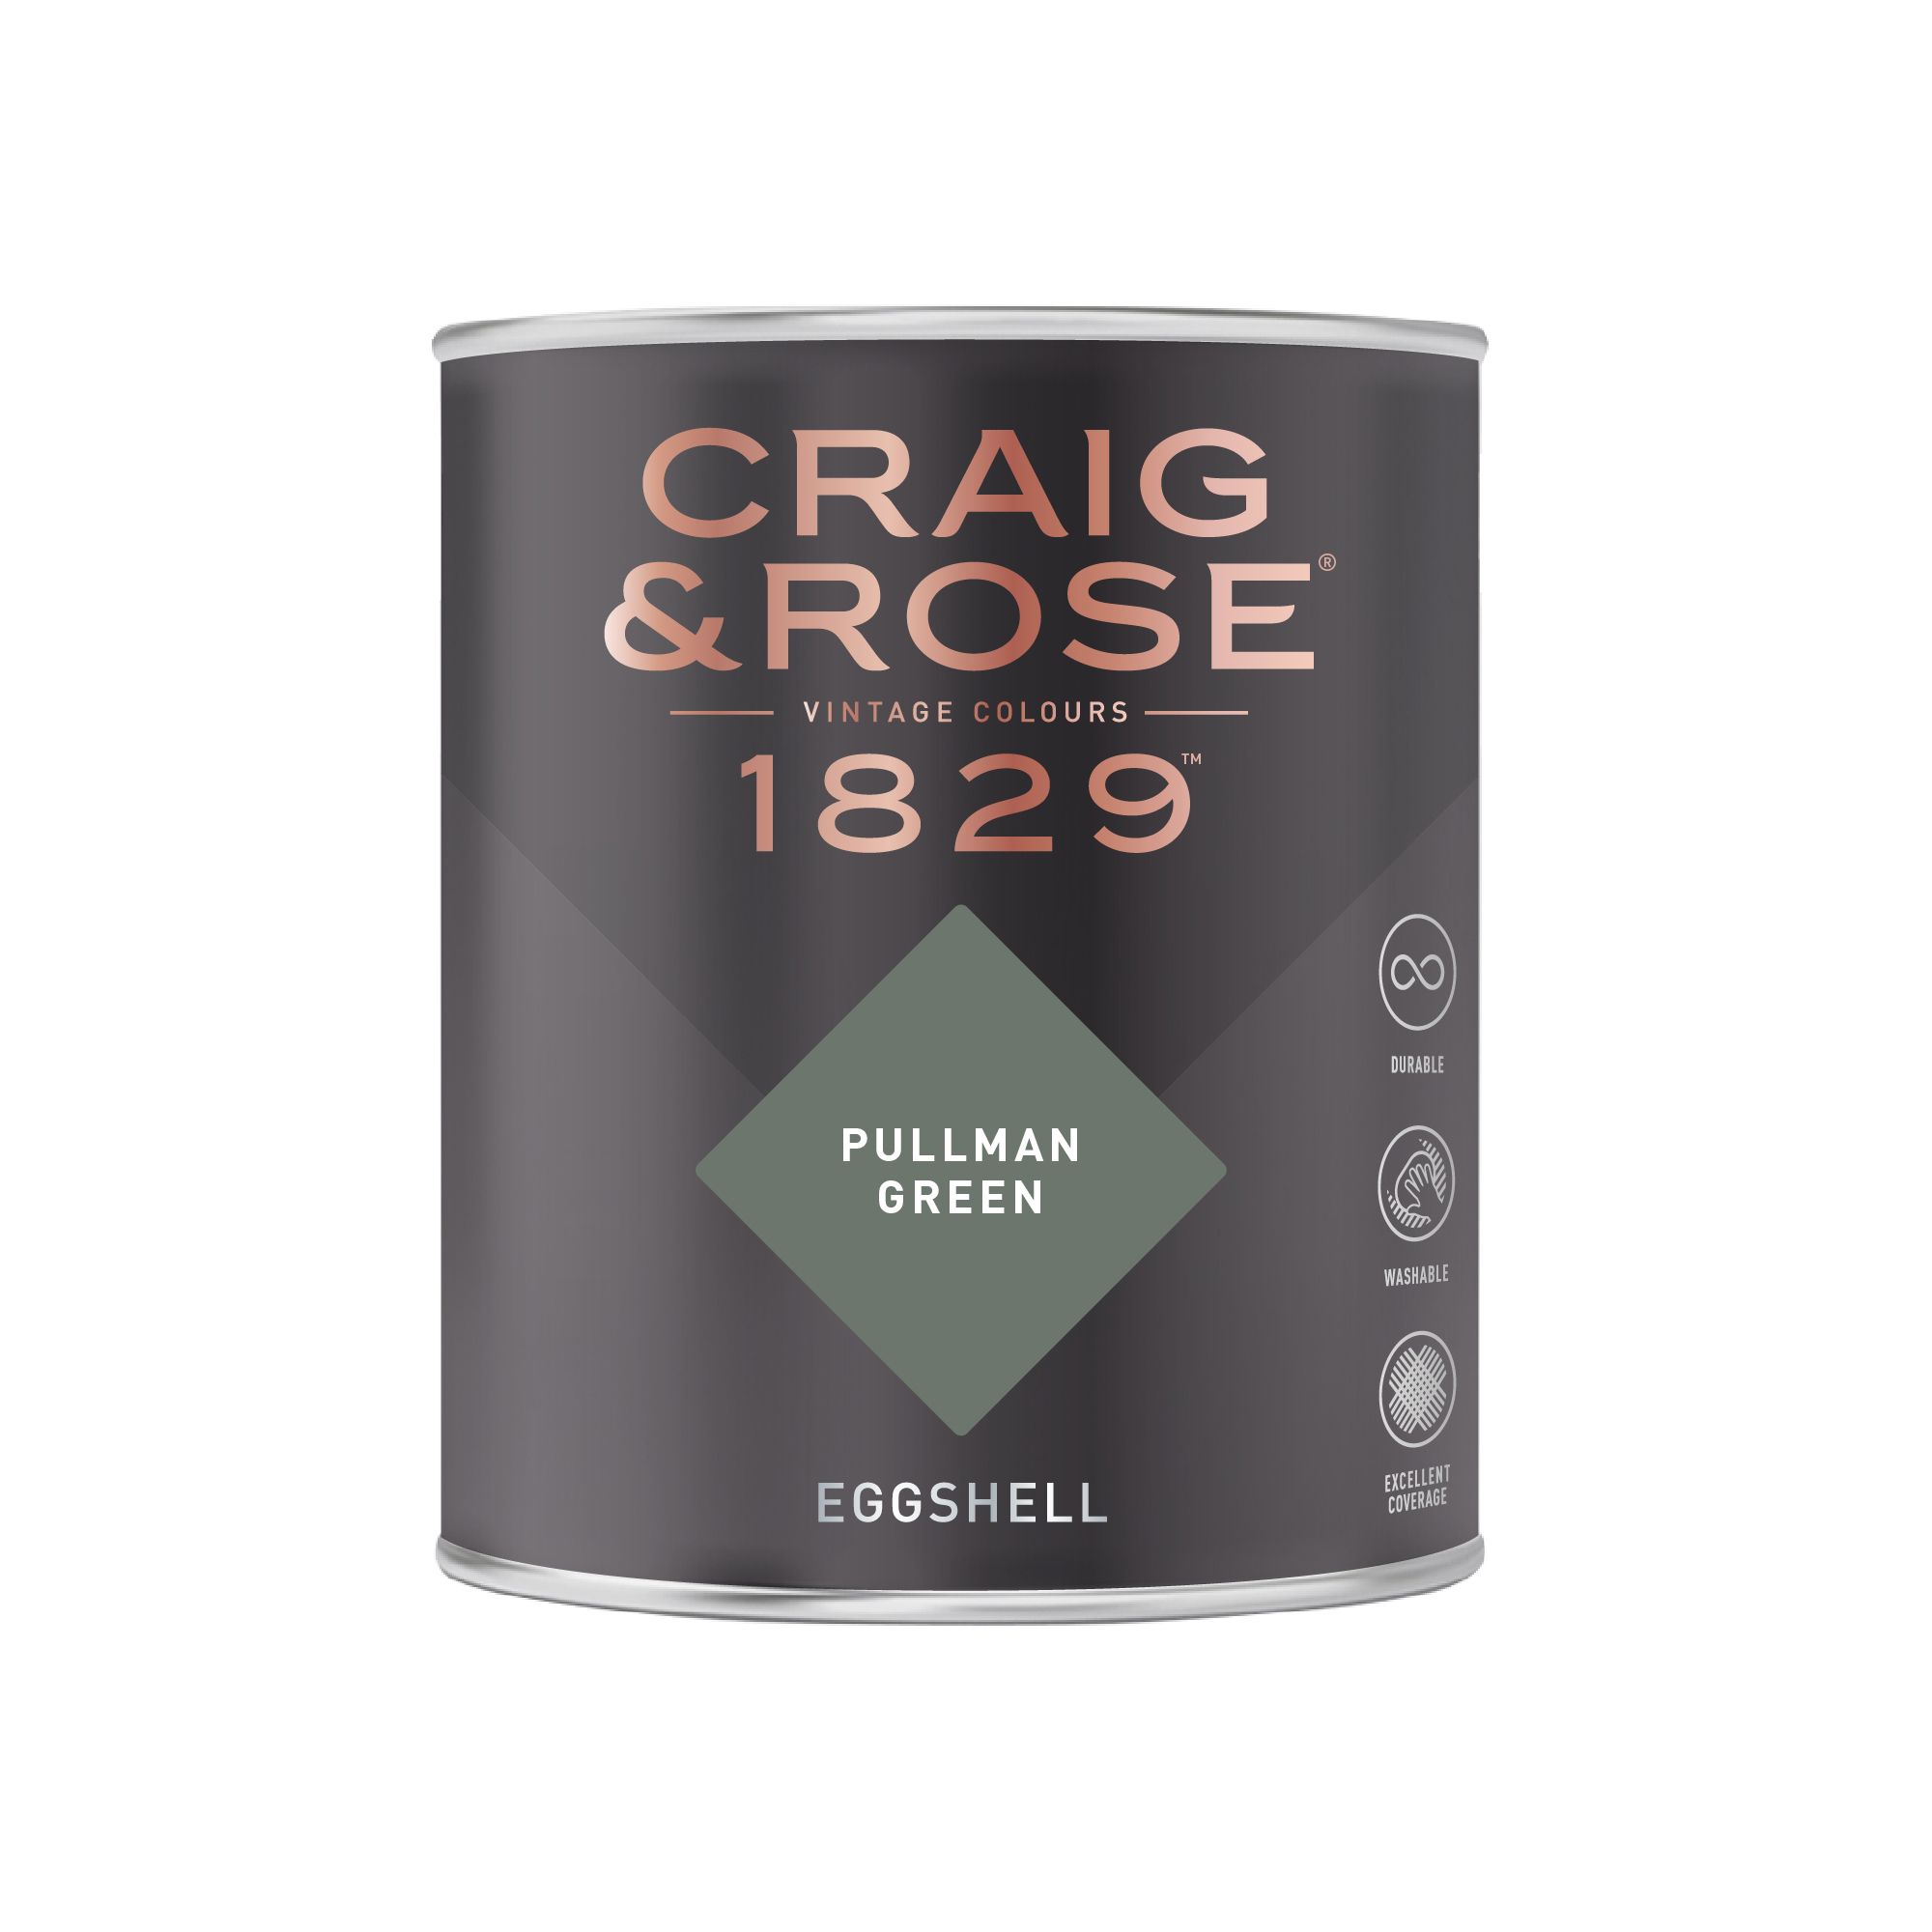 Craig & Rose 1829 Pullman Green Eggshell Wall paint, 750ml